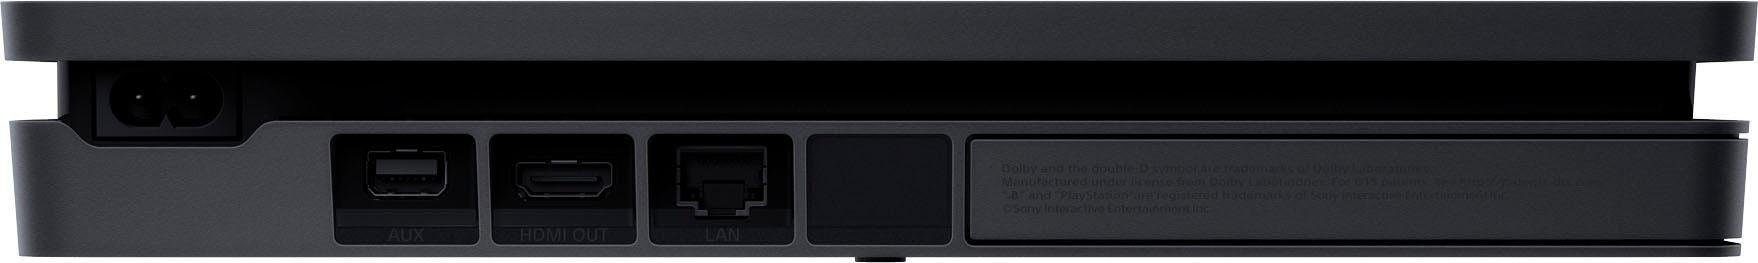 PlayStation 4 Slim, 500GB, of Tsushima Ghost inkl